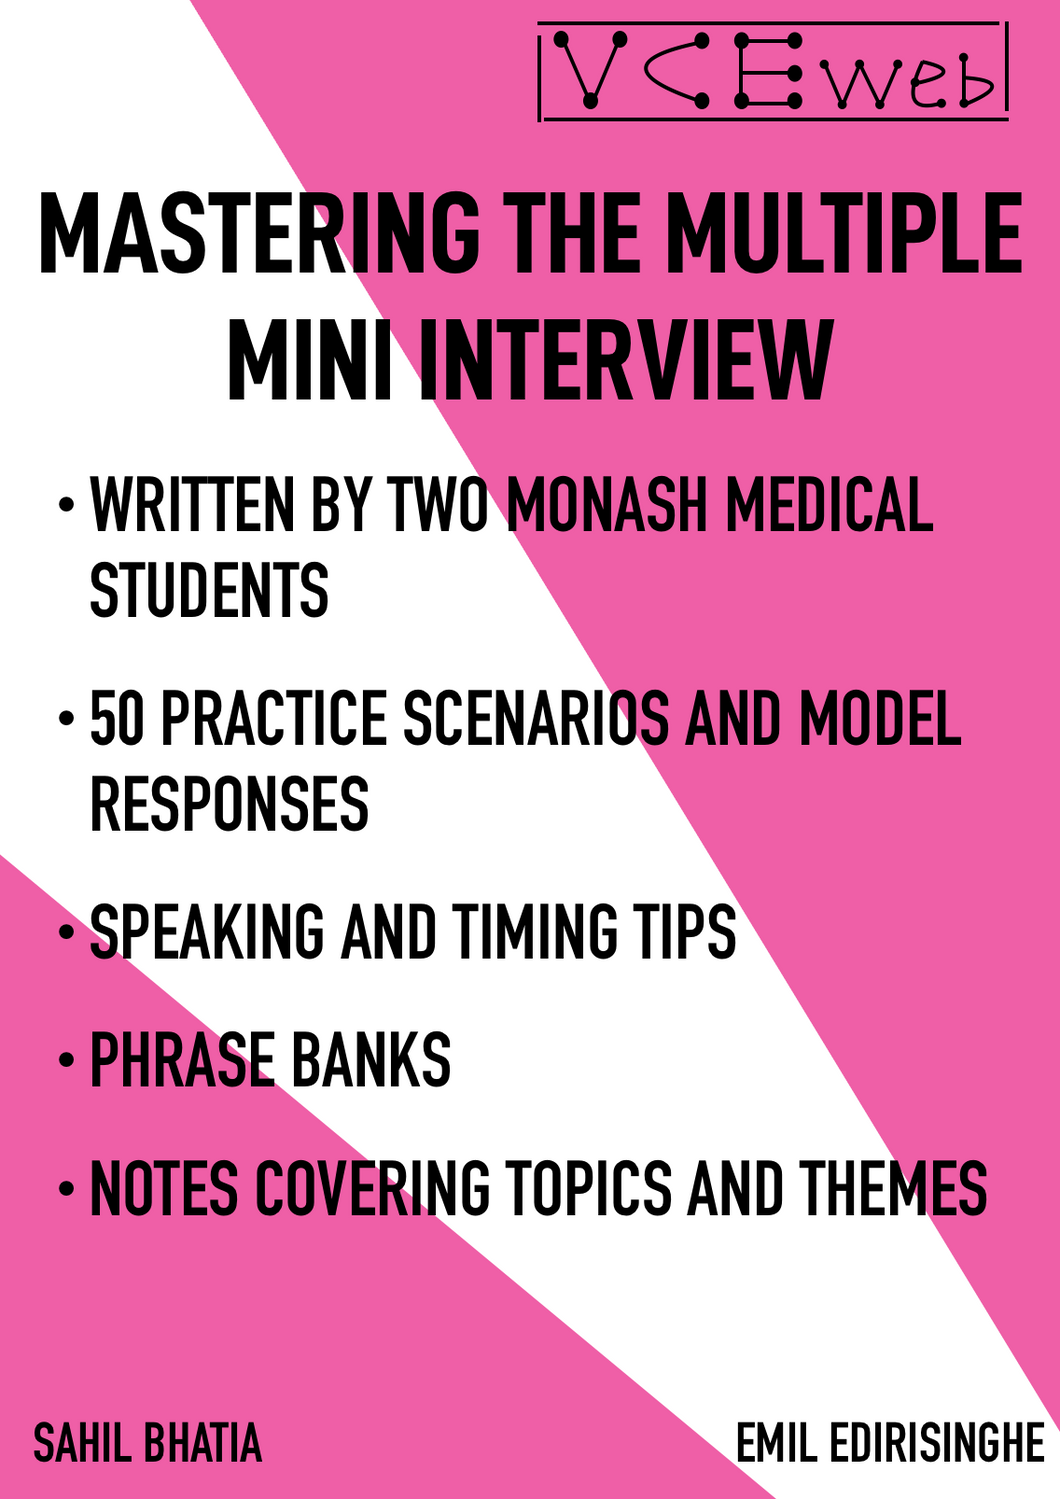 Mastering The Multiple Mini Interview | VCEWeb